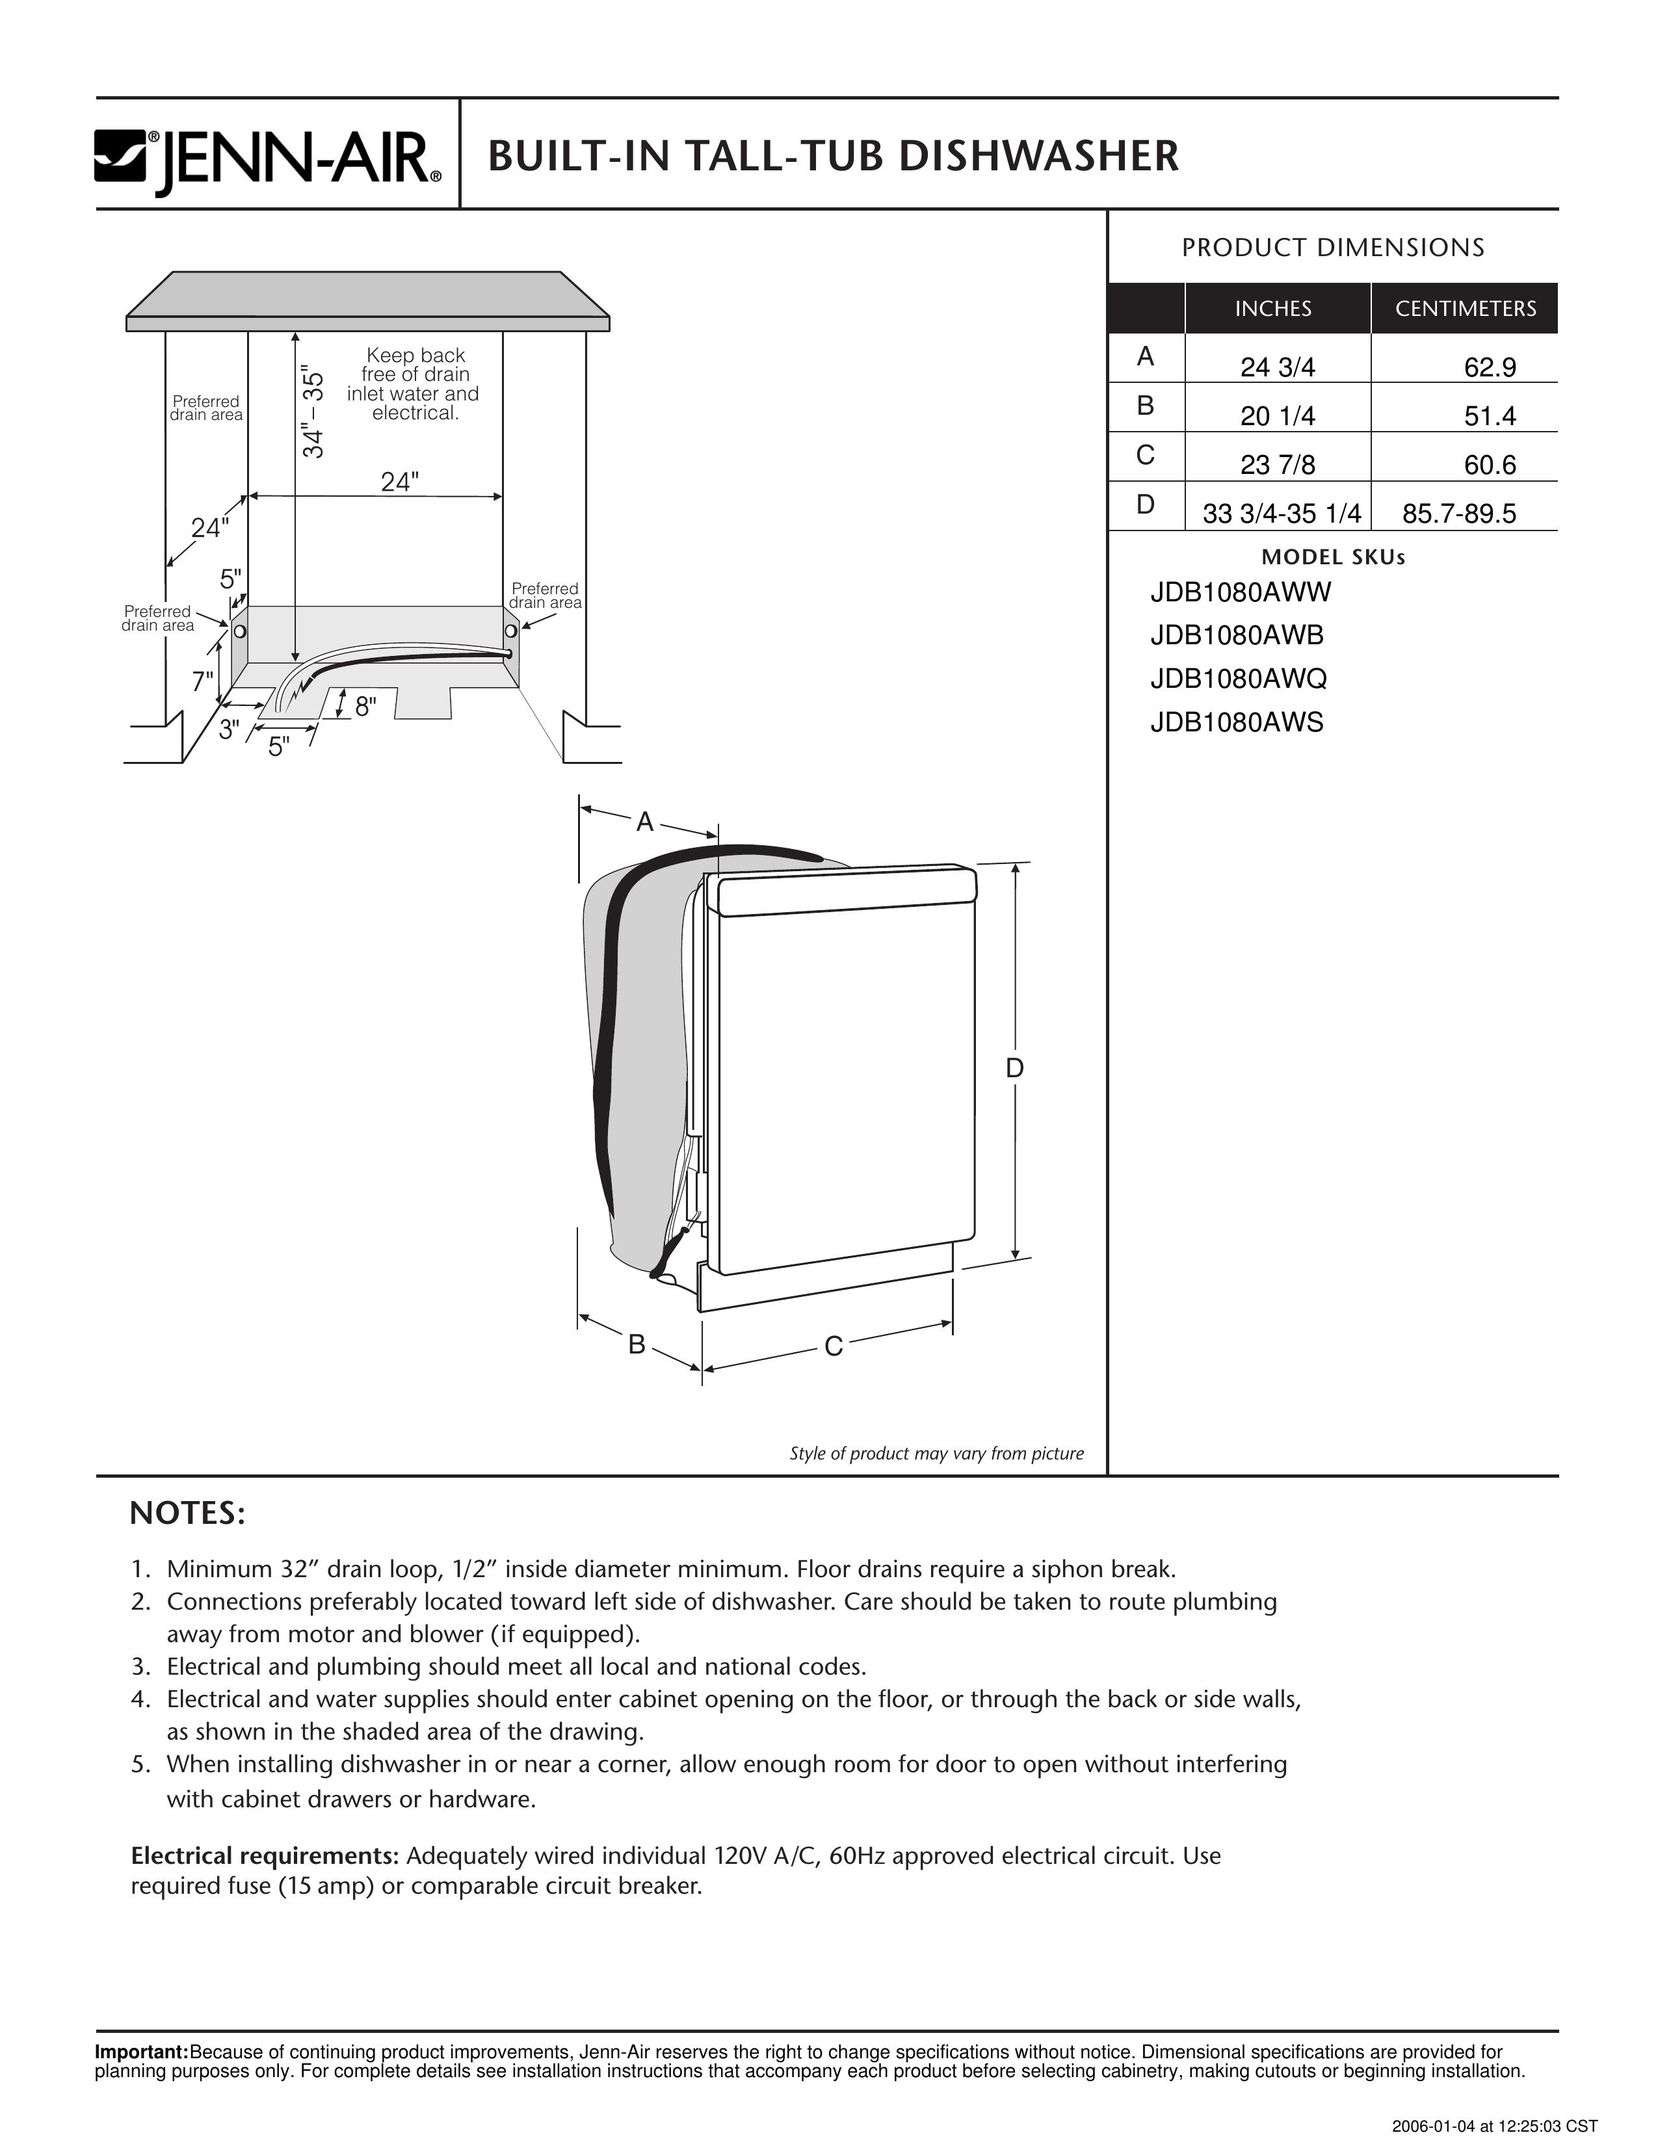 Jenn-Air JDB1080AWS Dishwasher User Manual